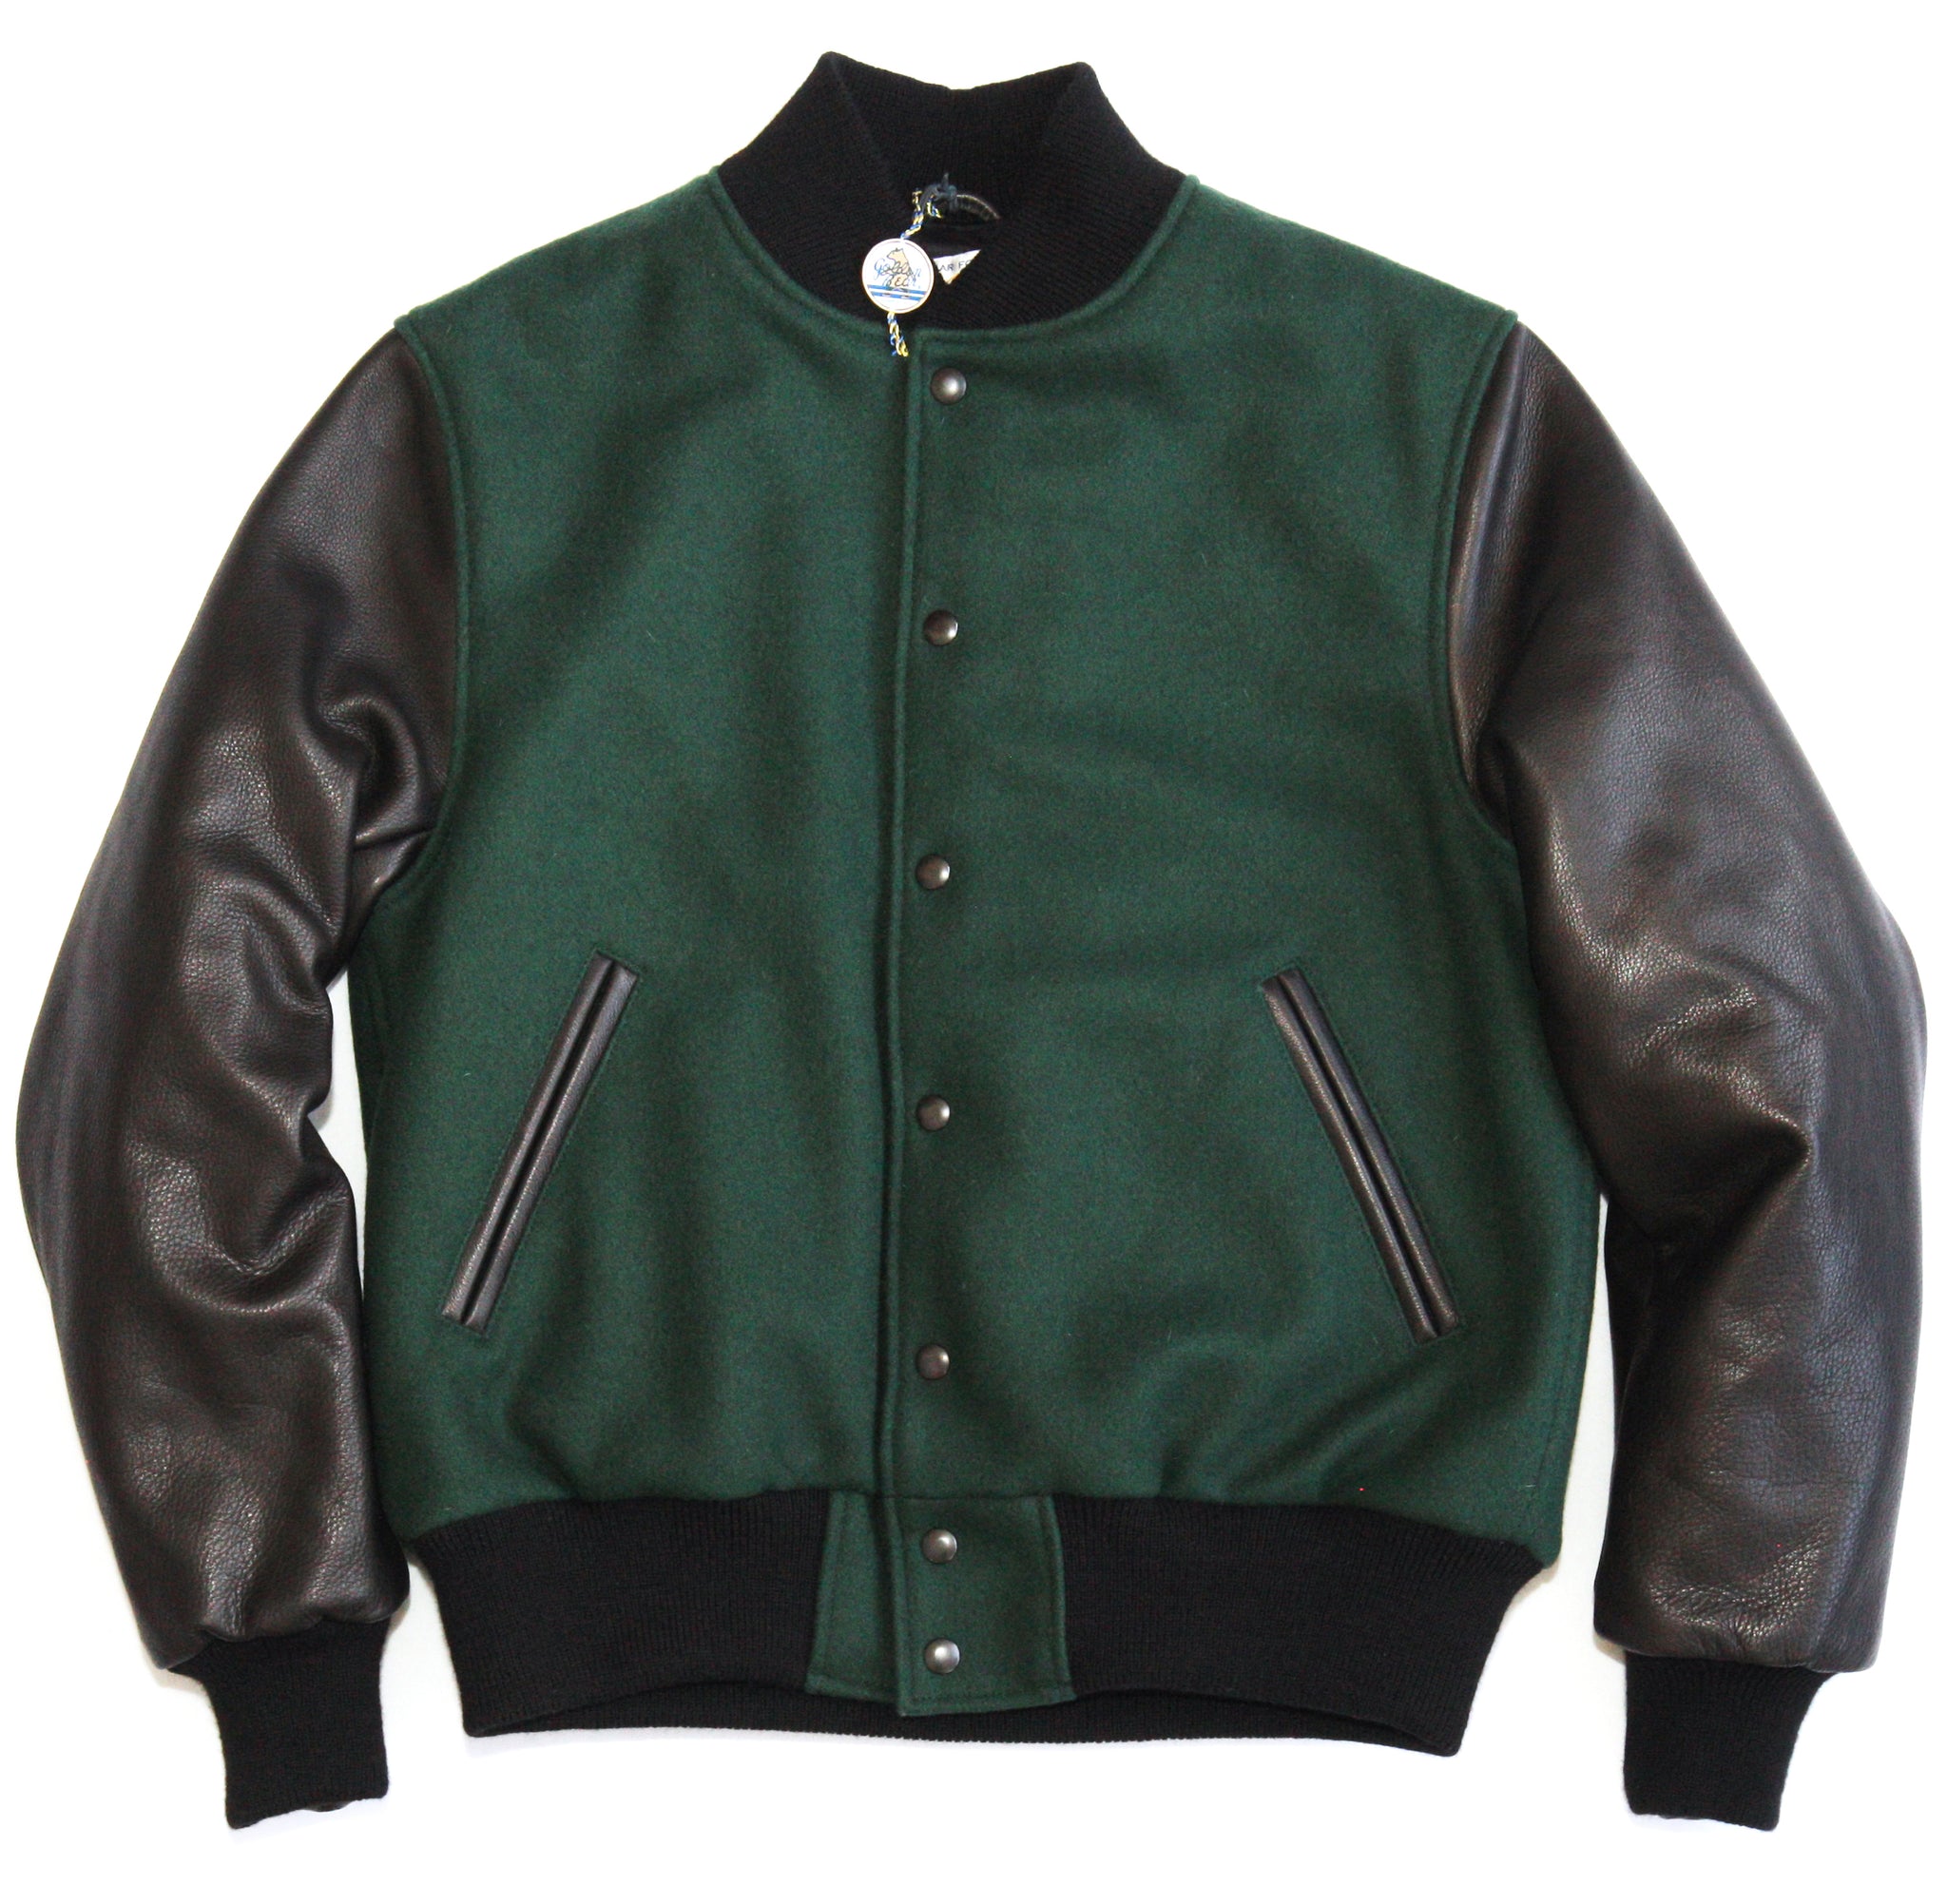 Forest/Black Classic Fit Varsity Jacket